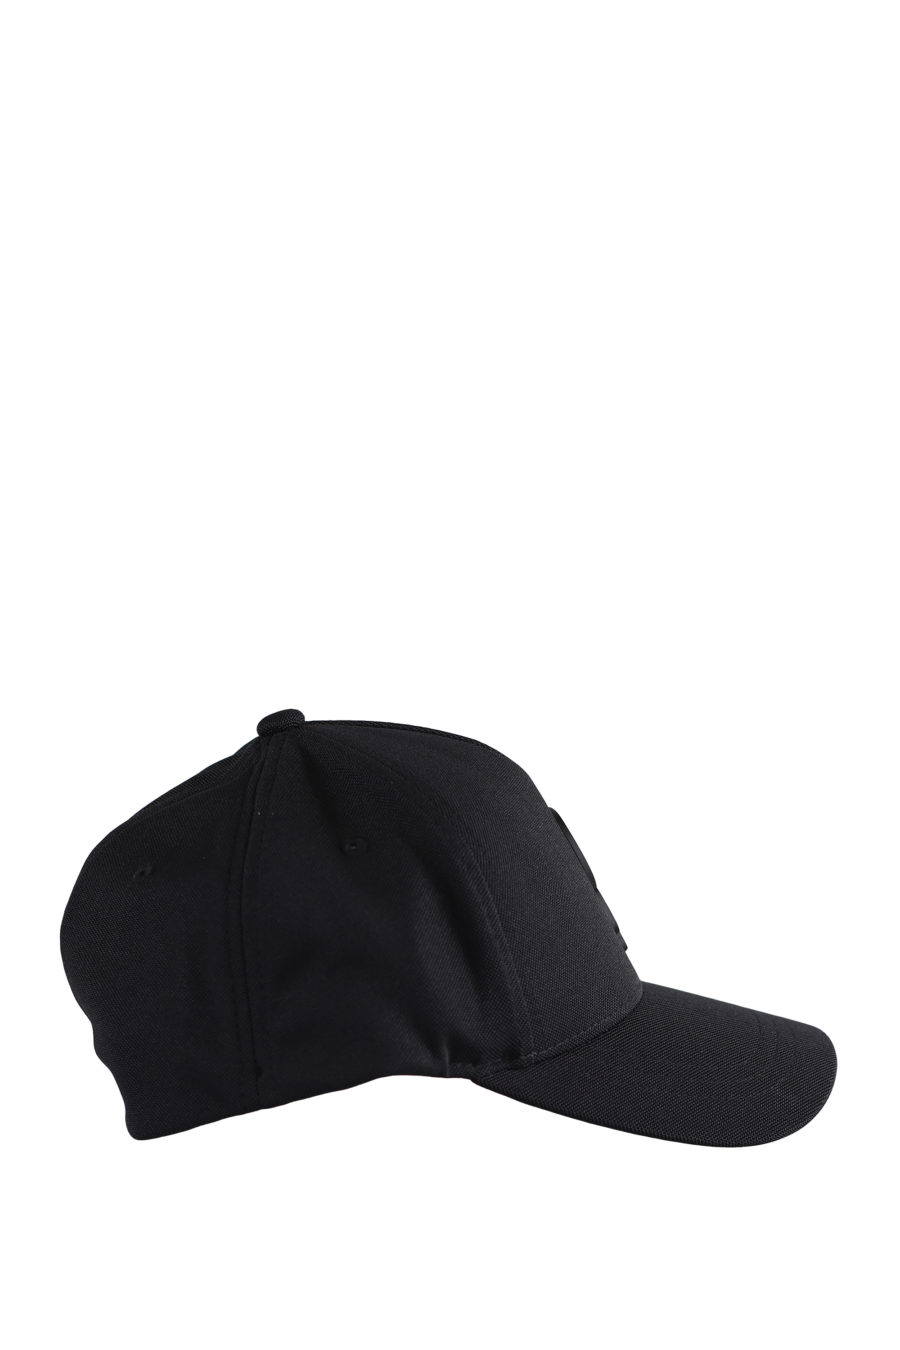 Black cap with white rubberised "Karl" - IMG 9603